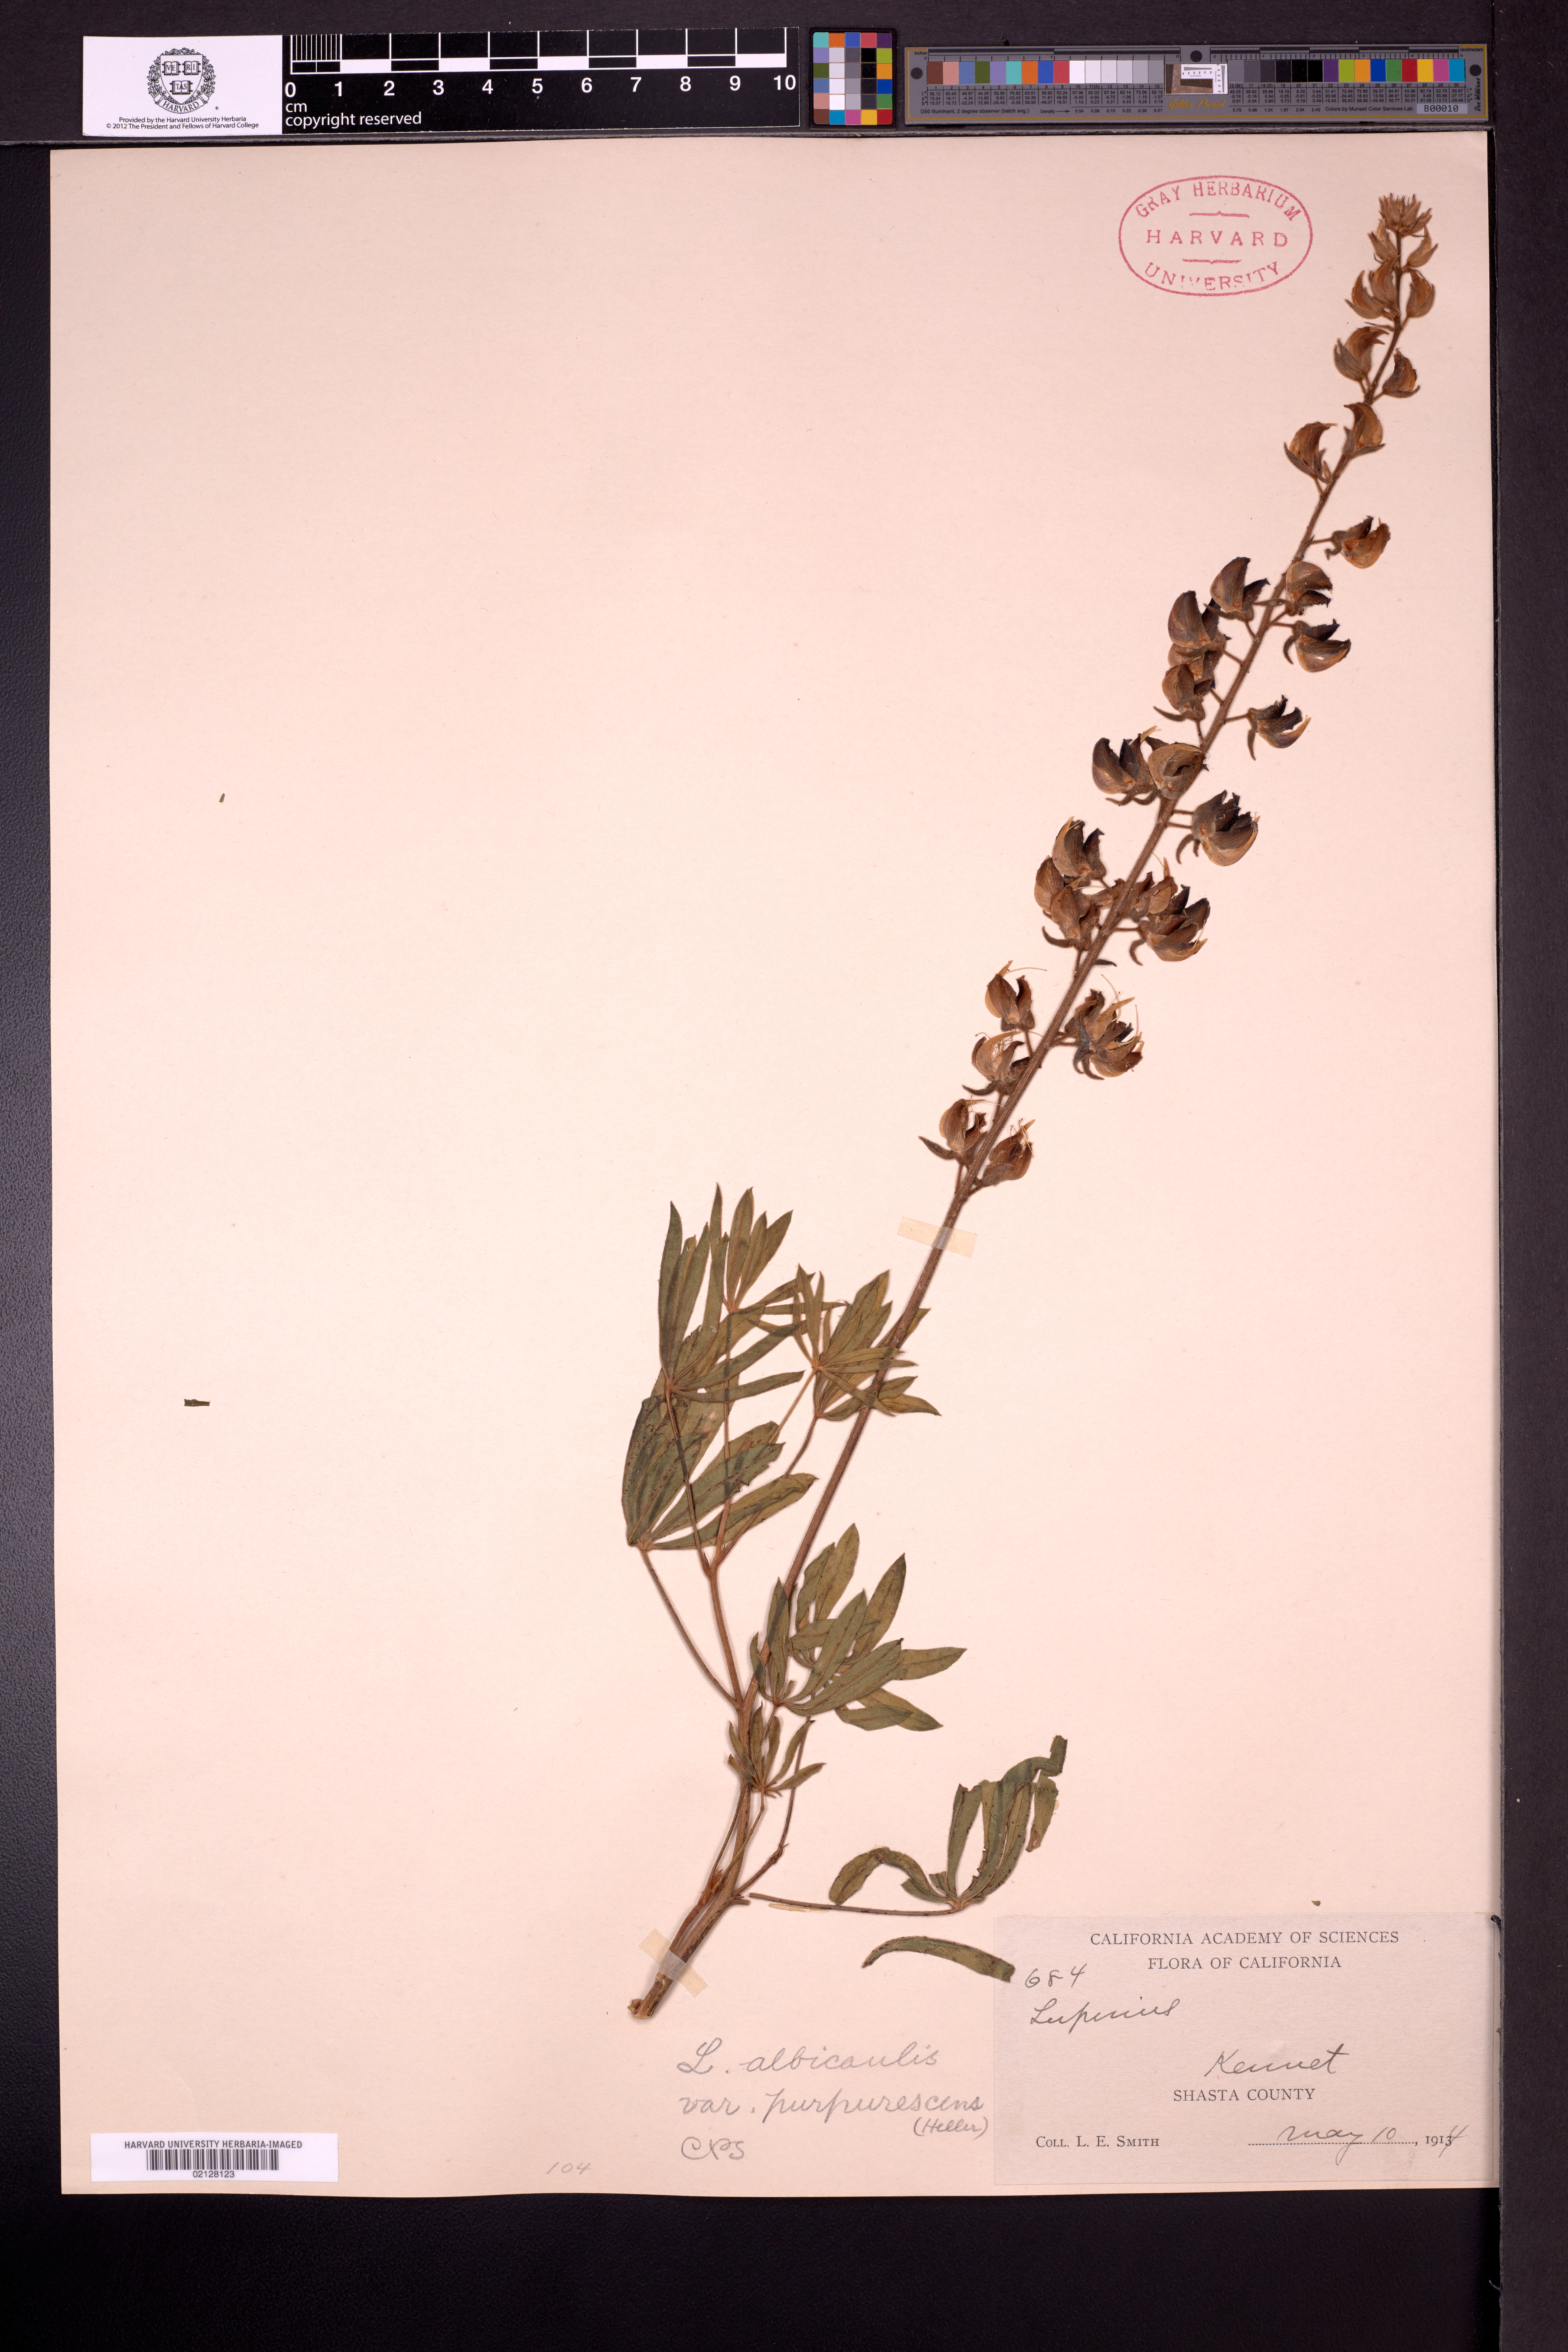 Lupinus purpurascens image